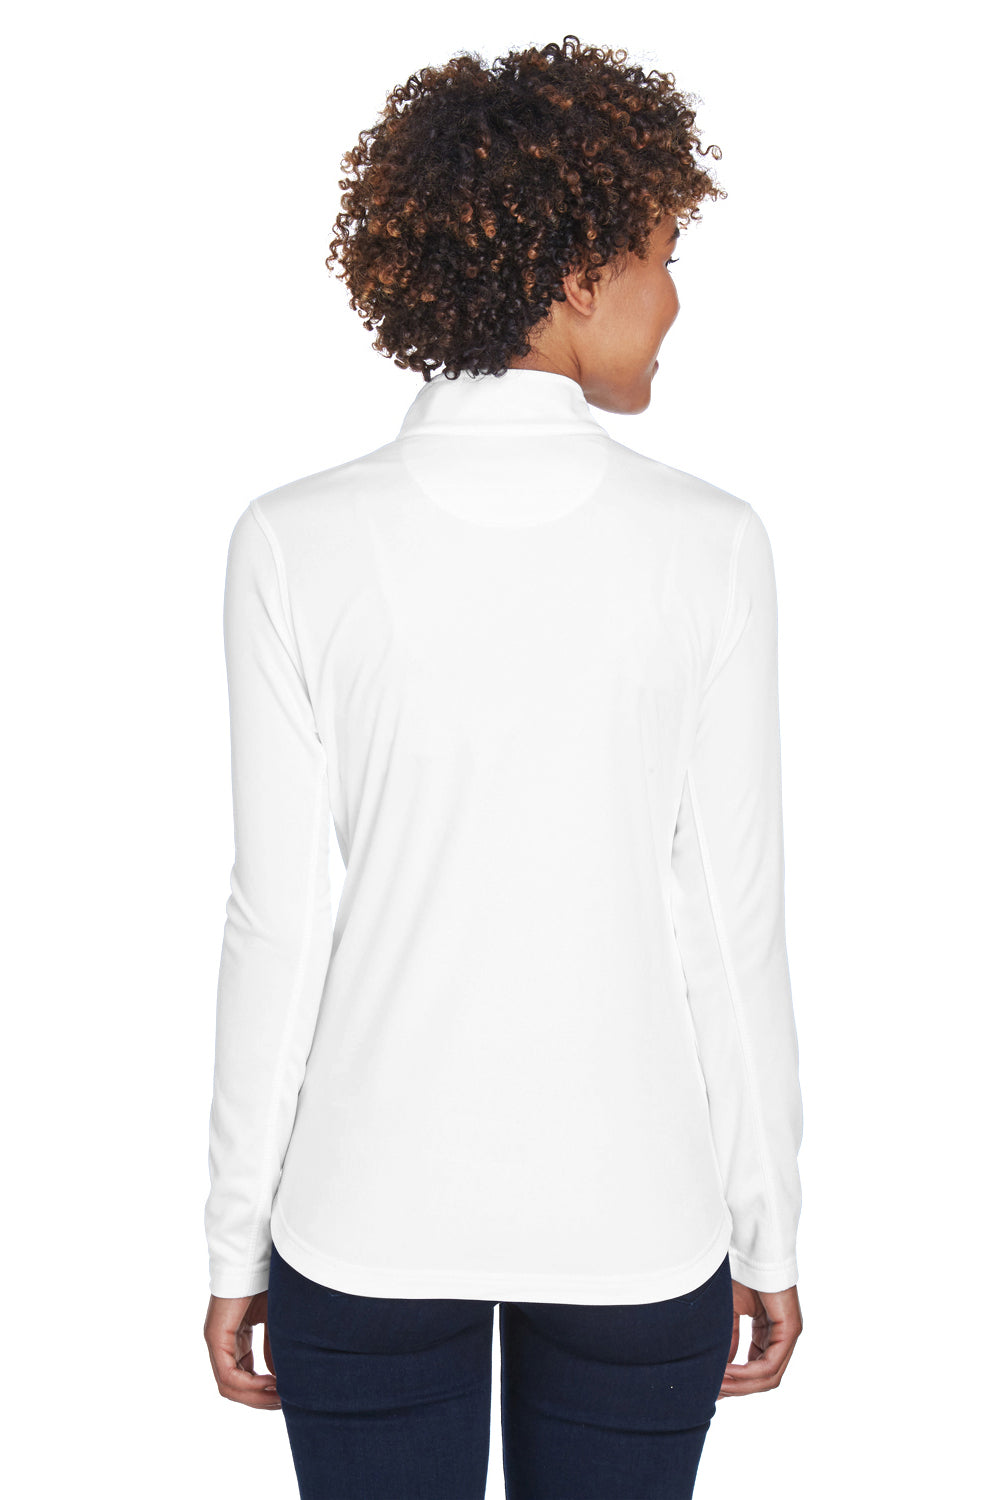 UltraClub 8230L Womens Cool & Dry Moisture Wicking 1/4 Zip Sweatshirt White Back